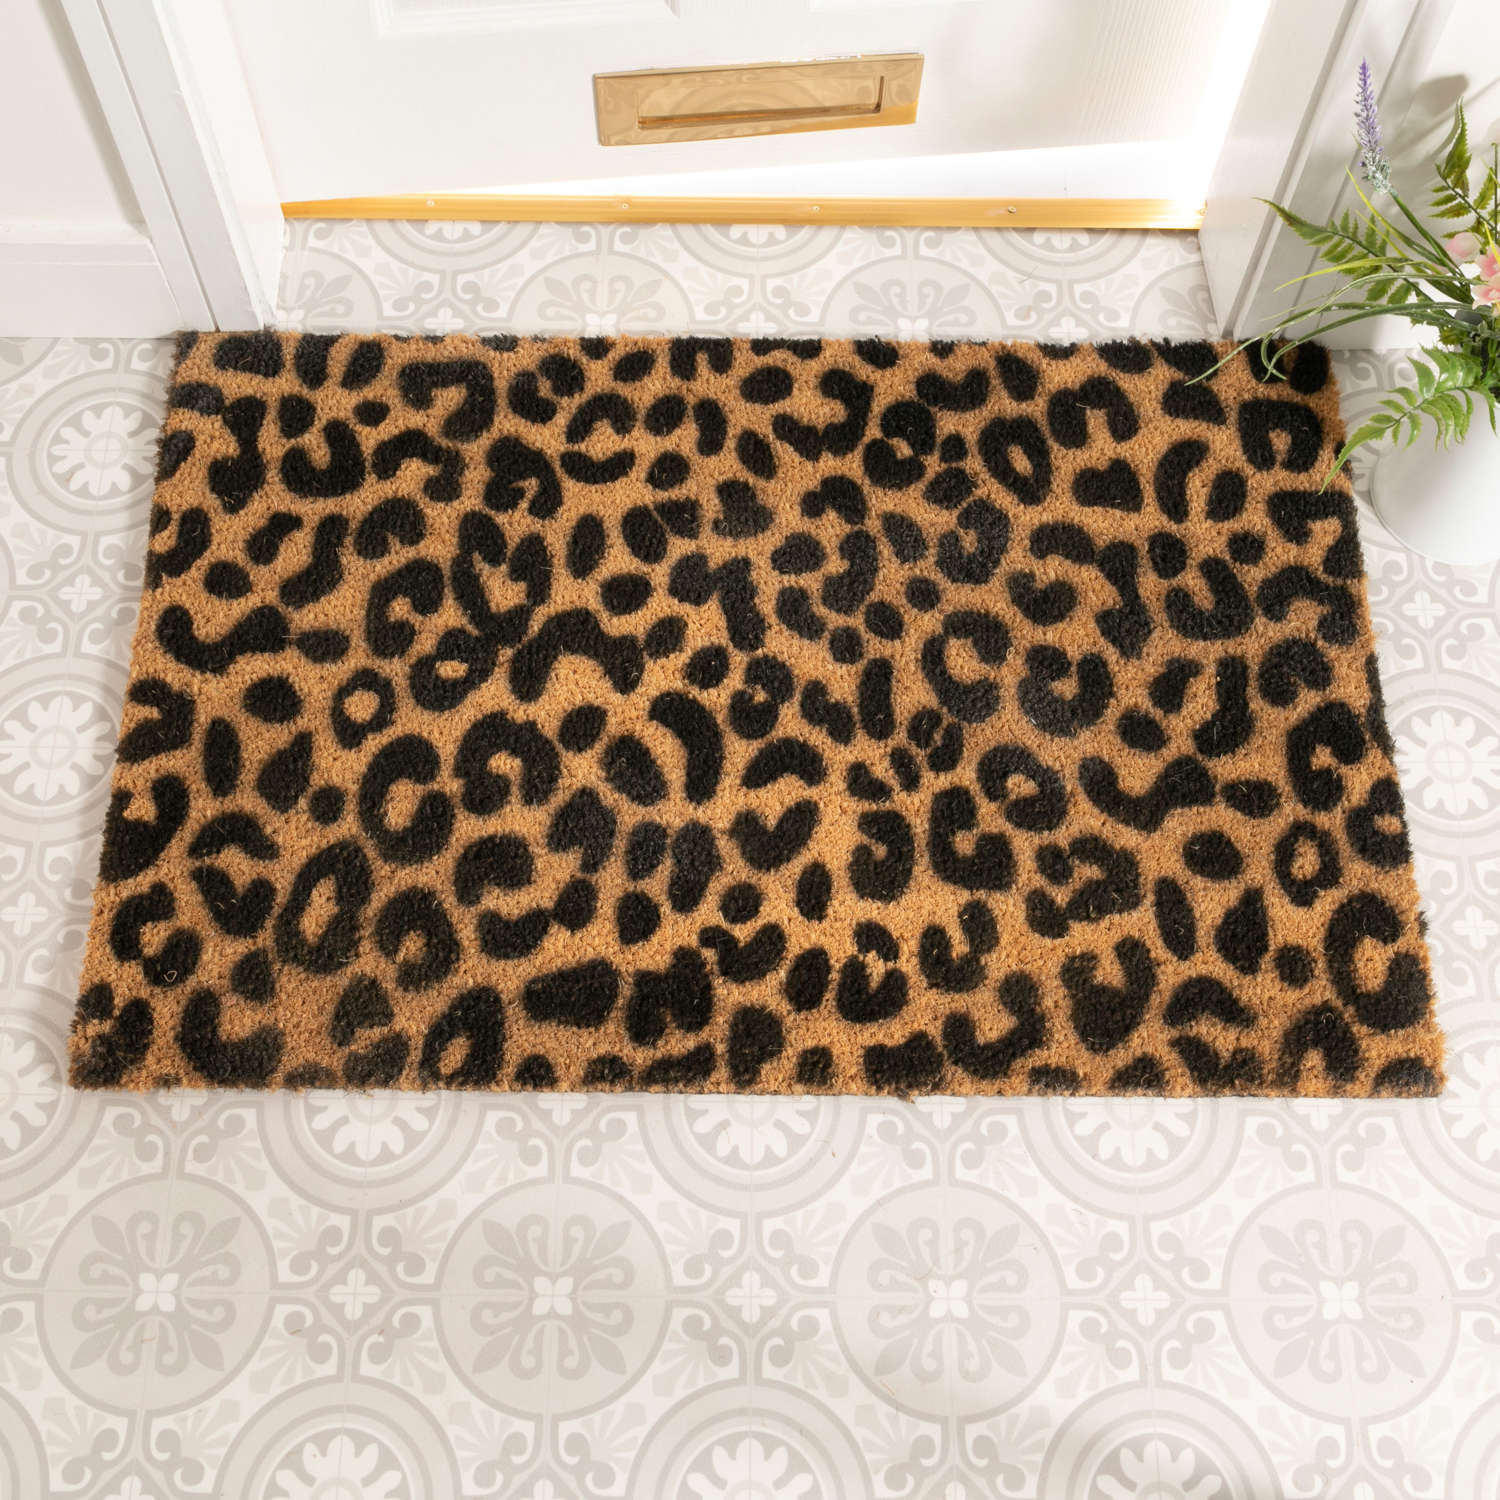 Leopard design rural house larger size doormat